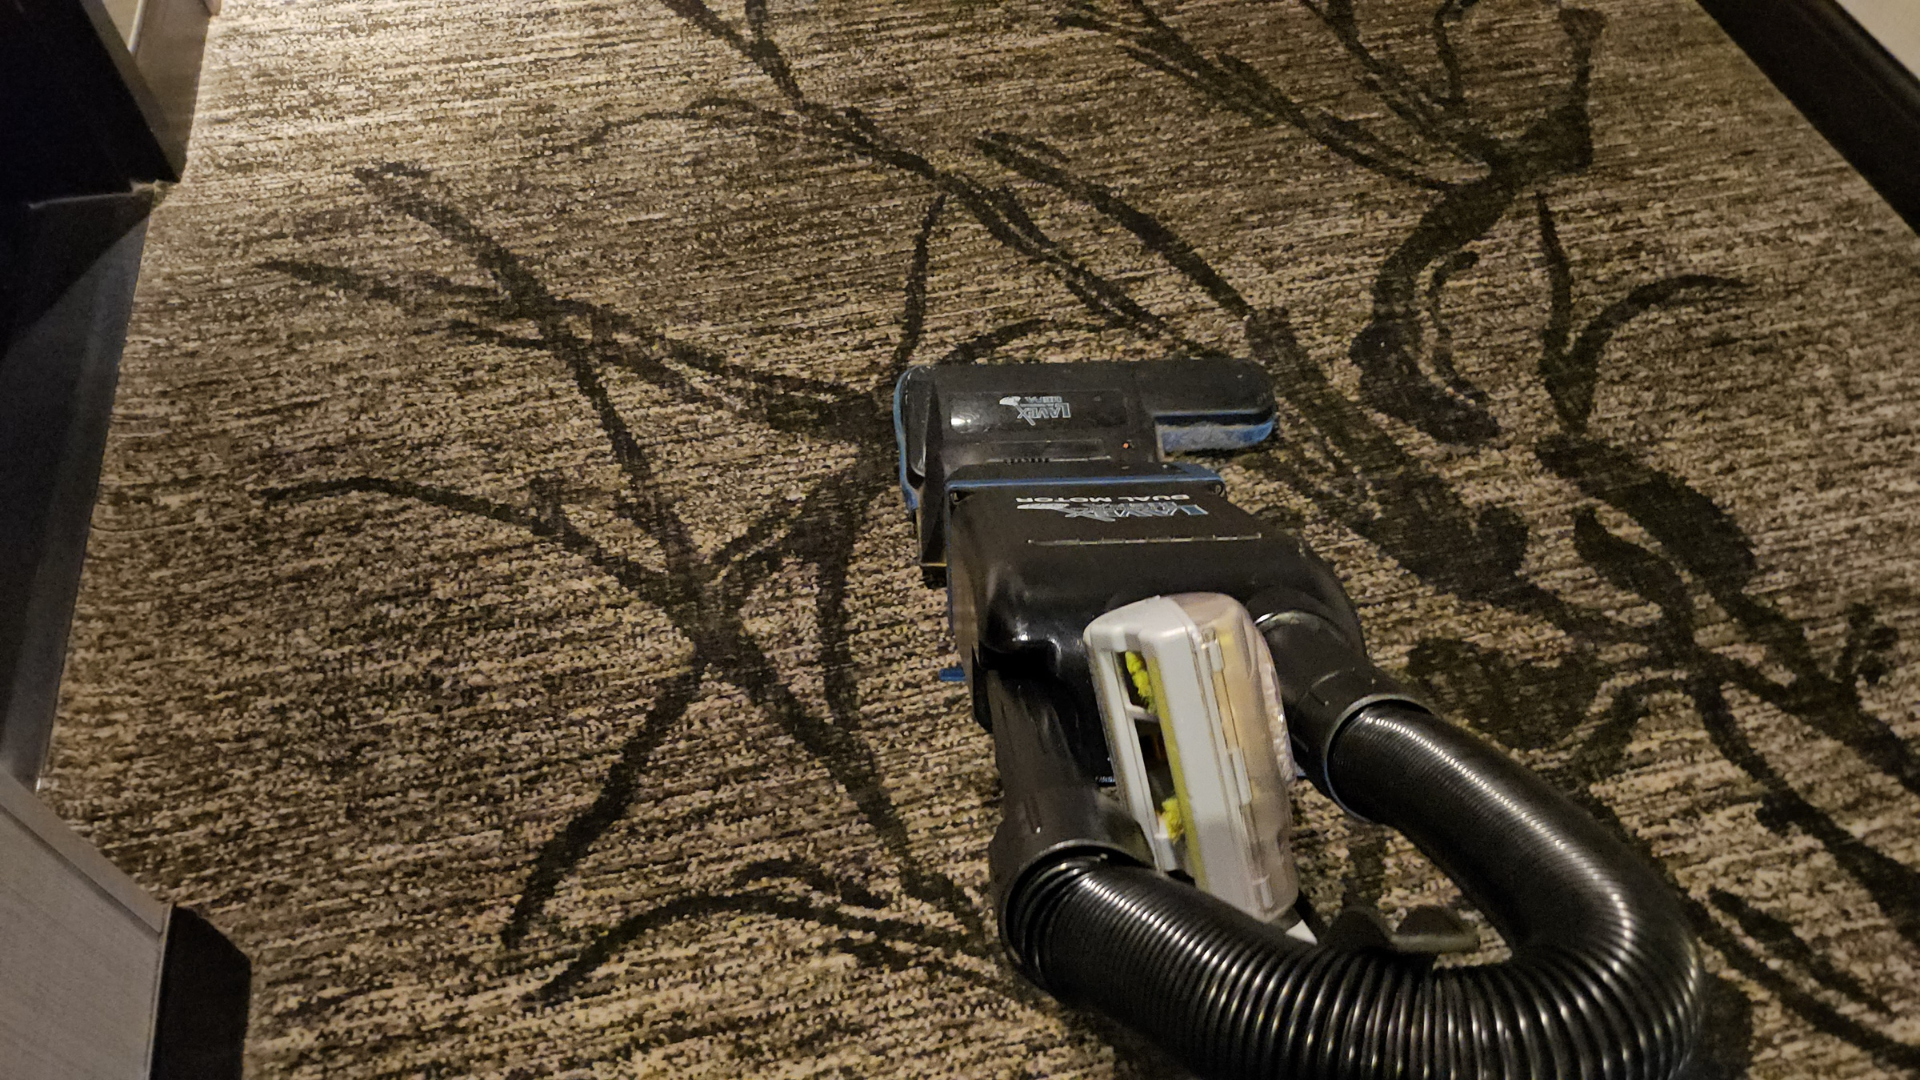 VLM Carpet Cleaning